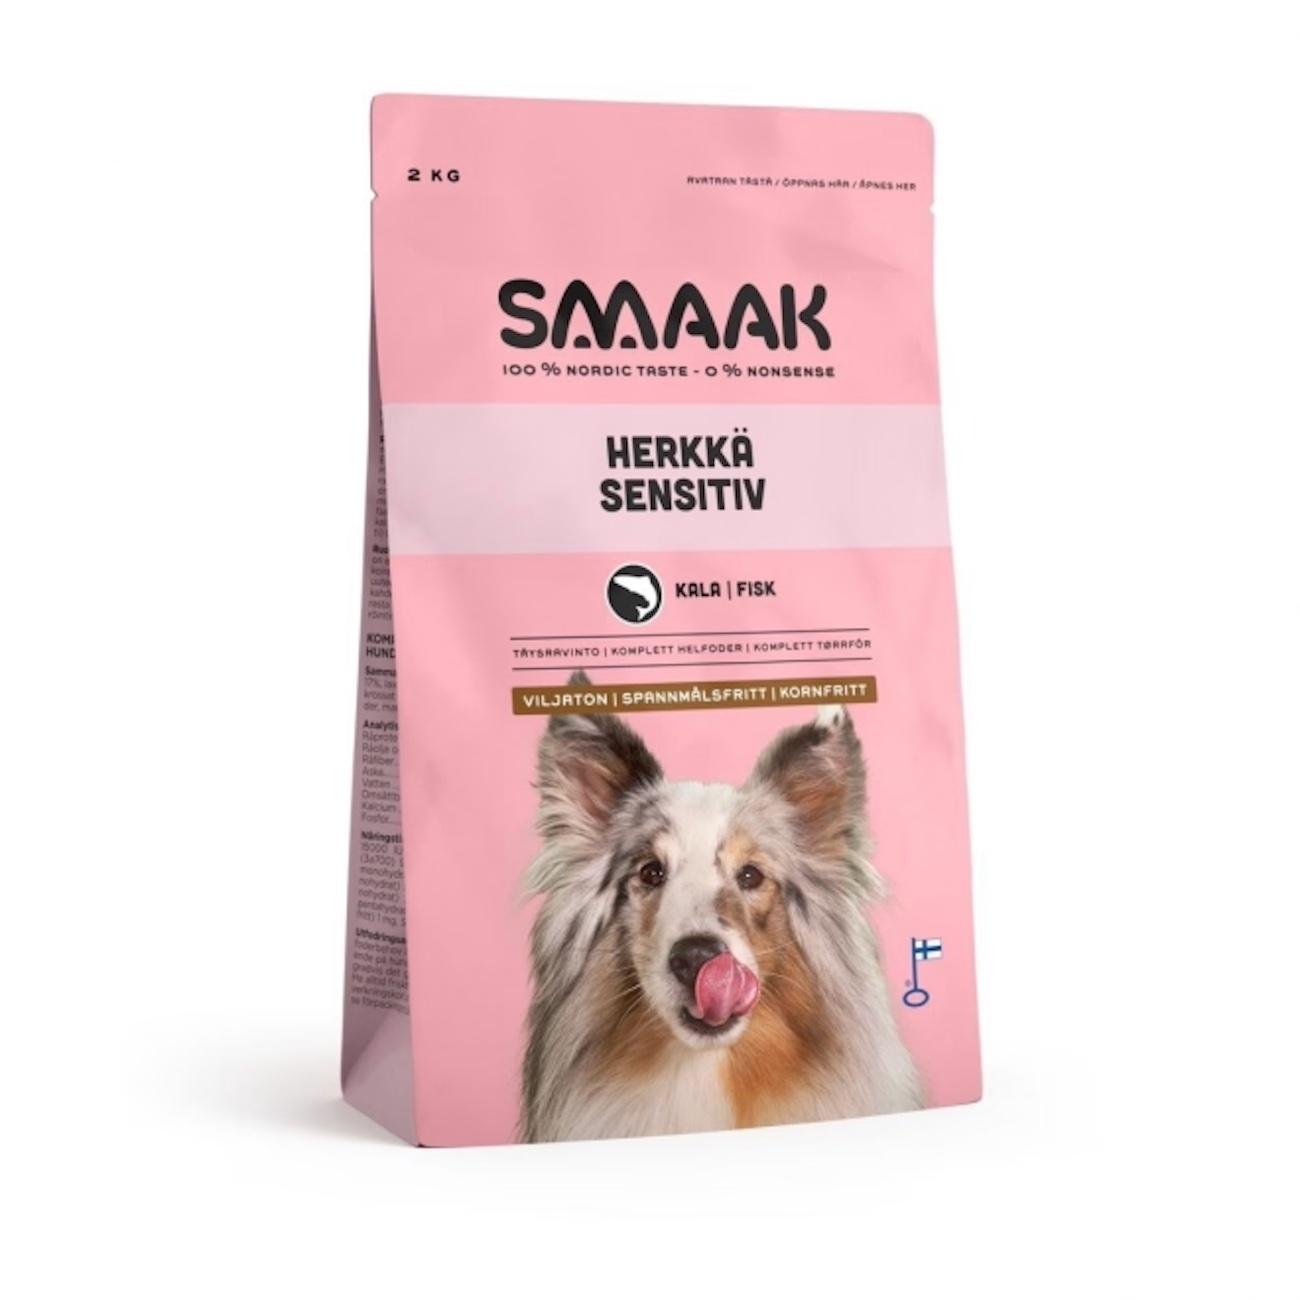 En av de återkallade produkterna: SMAAK Adult Grain-Free Fish for Dogs.